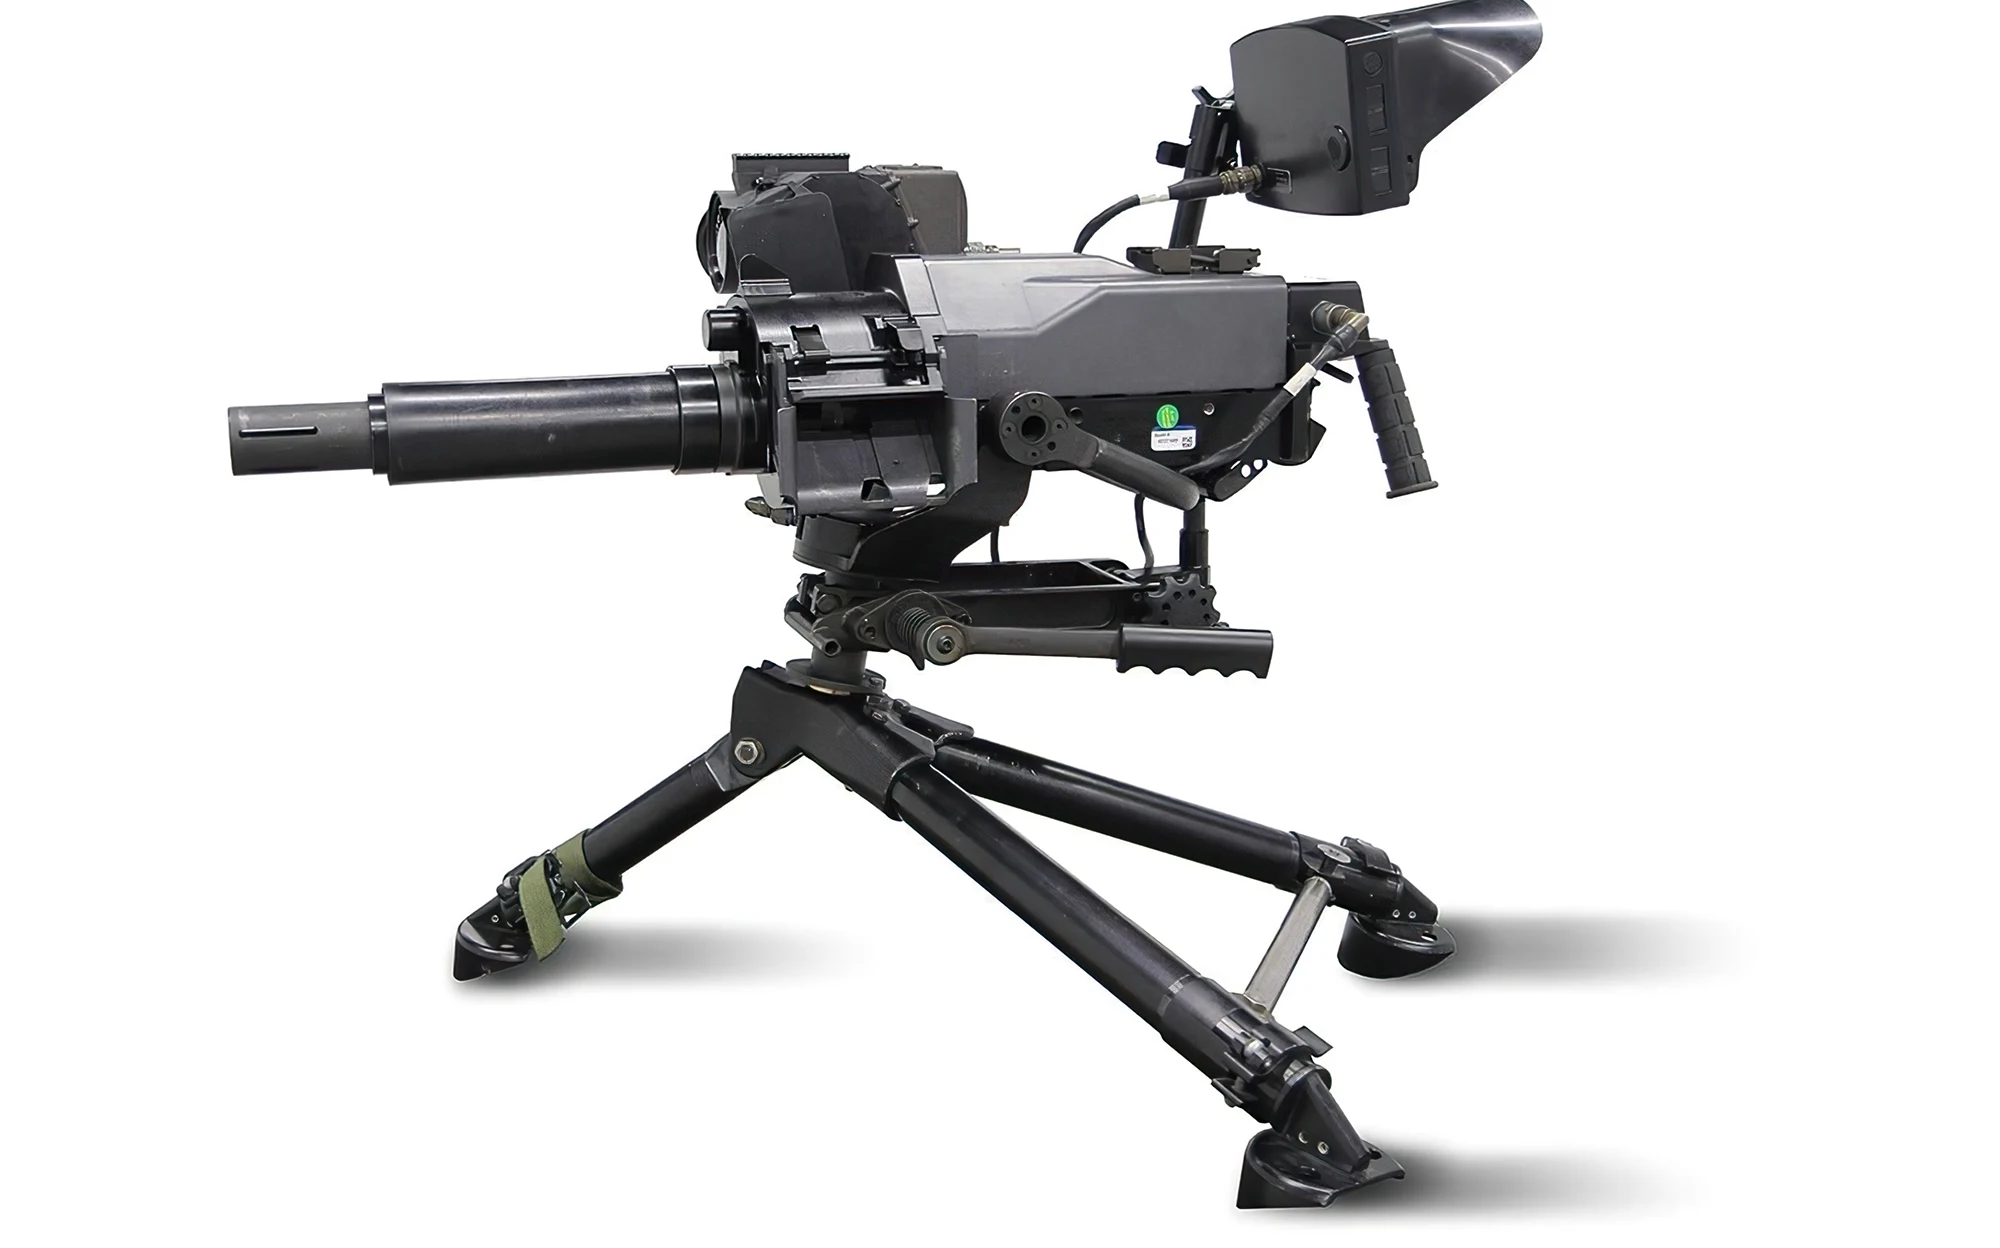 Beam mp launcher. MK 47 Striker. Mk47 «Striker» 40. Автоматический станковый гранатомет MK.47. MK 47 автоматический гранатомет.